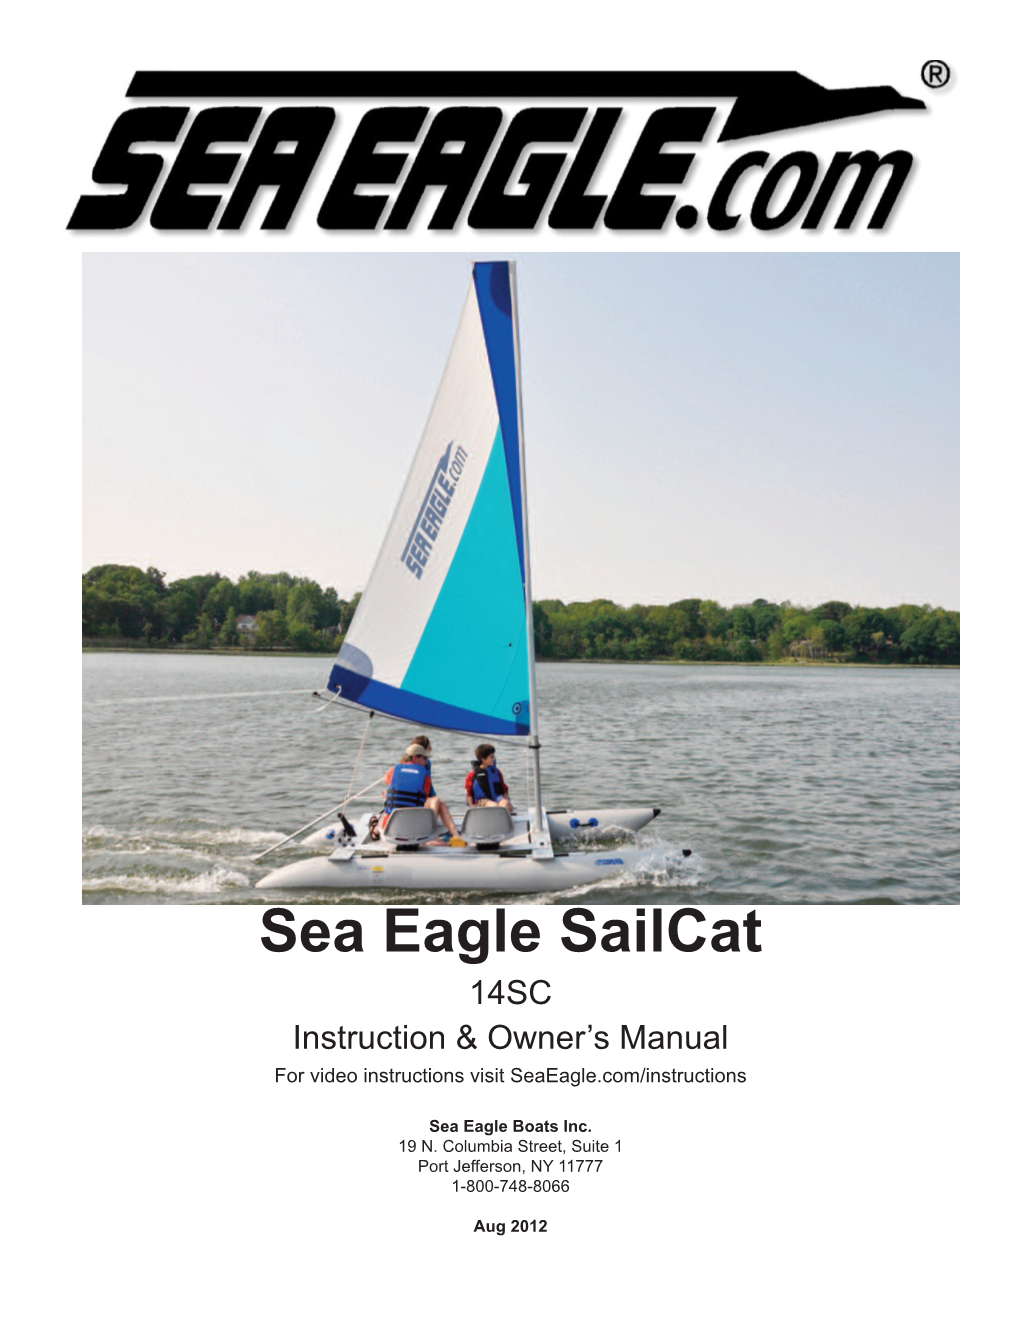 Sea Eagle Sailcat 14SC Instruction & Owner’S Manual for Video Instructions Visit Seaeagle.Com/Instructions